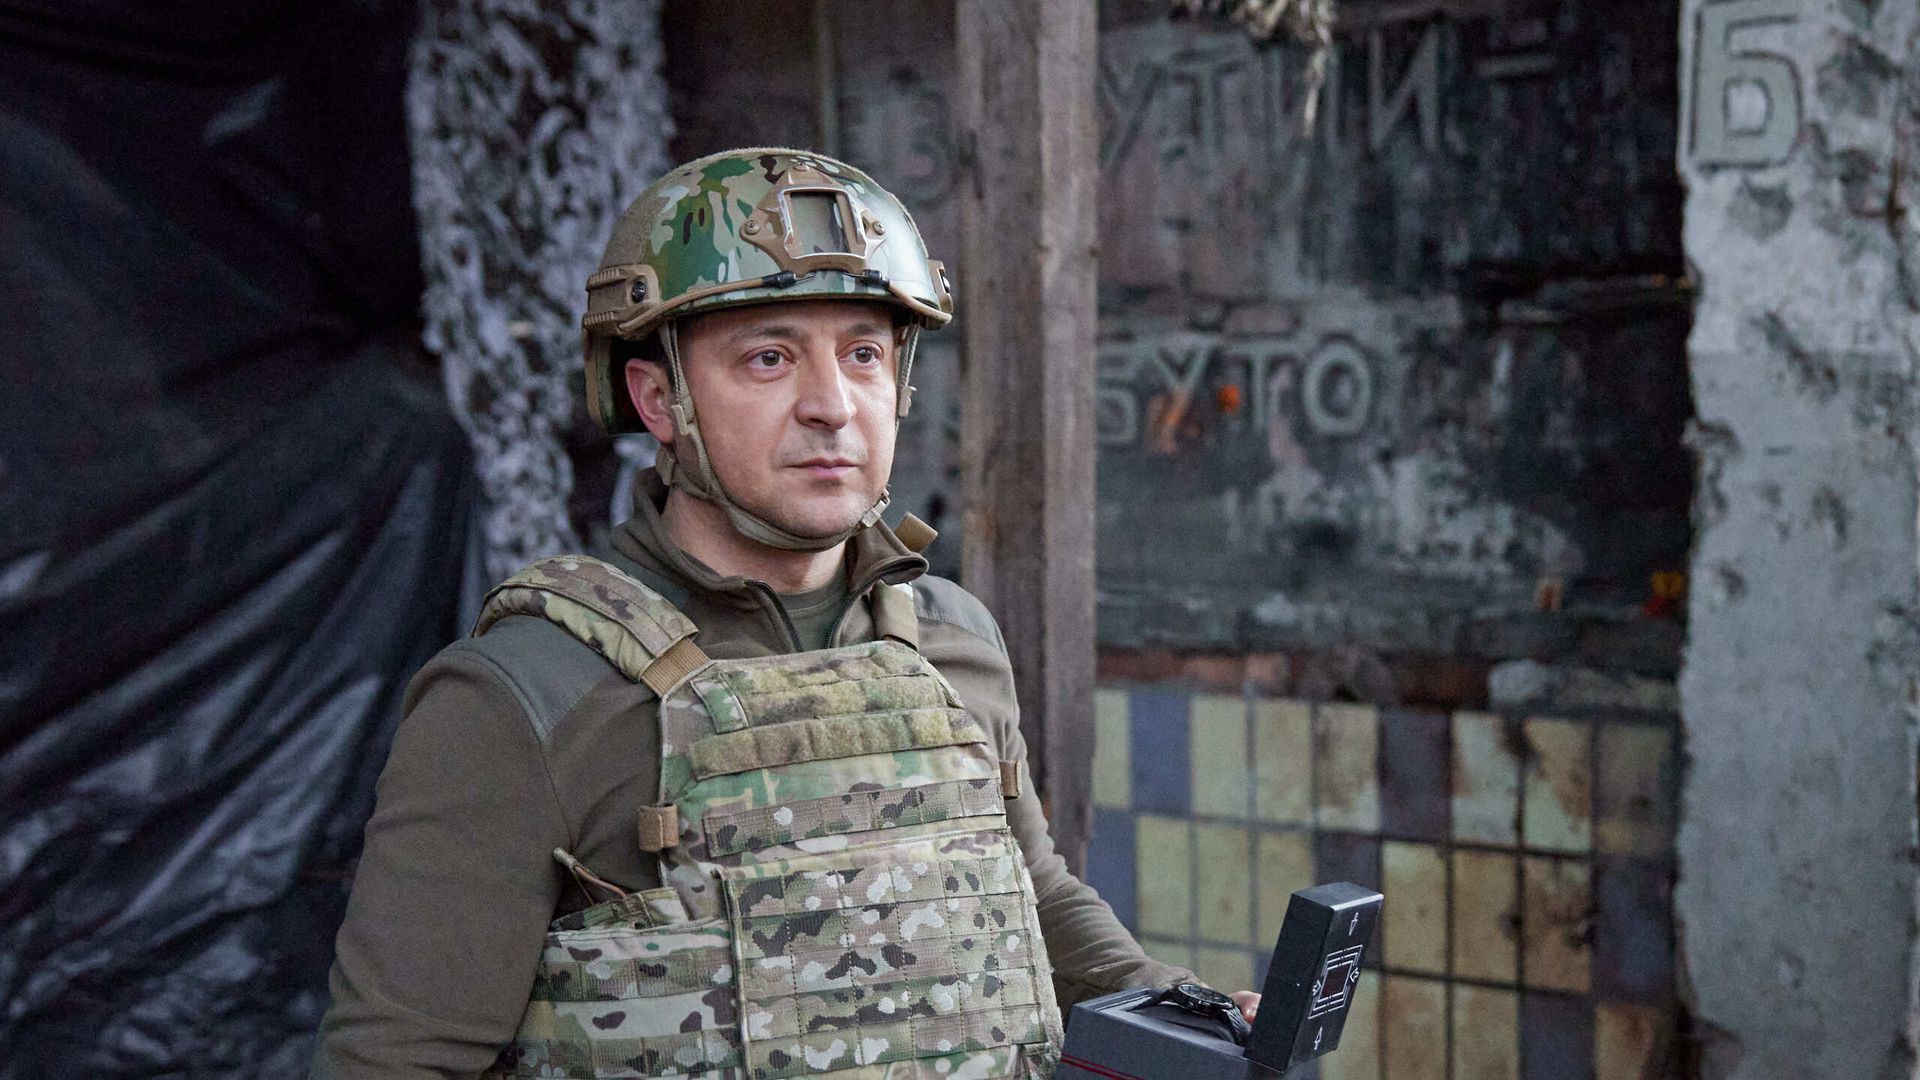 Photo of Volodymyr Zelensky wearing combat gear